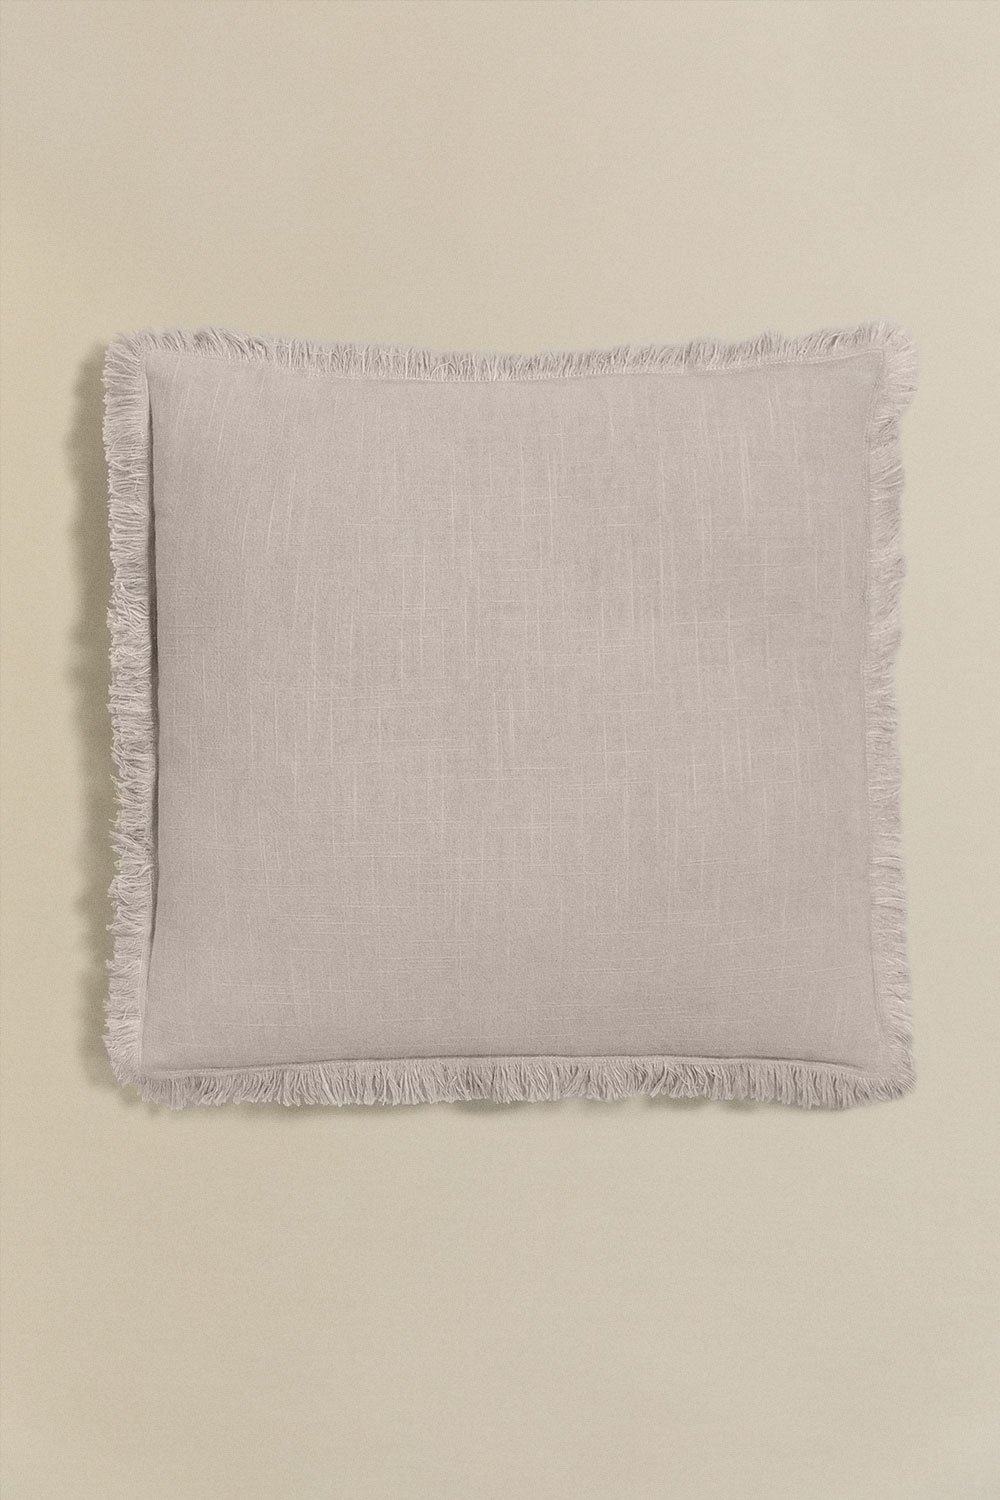 Nedeliya square cotton cushion (45x45 cm) , gallery image 1